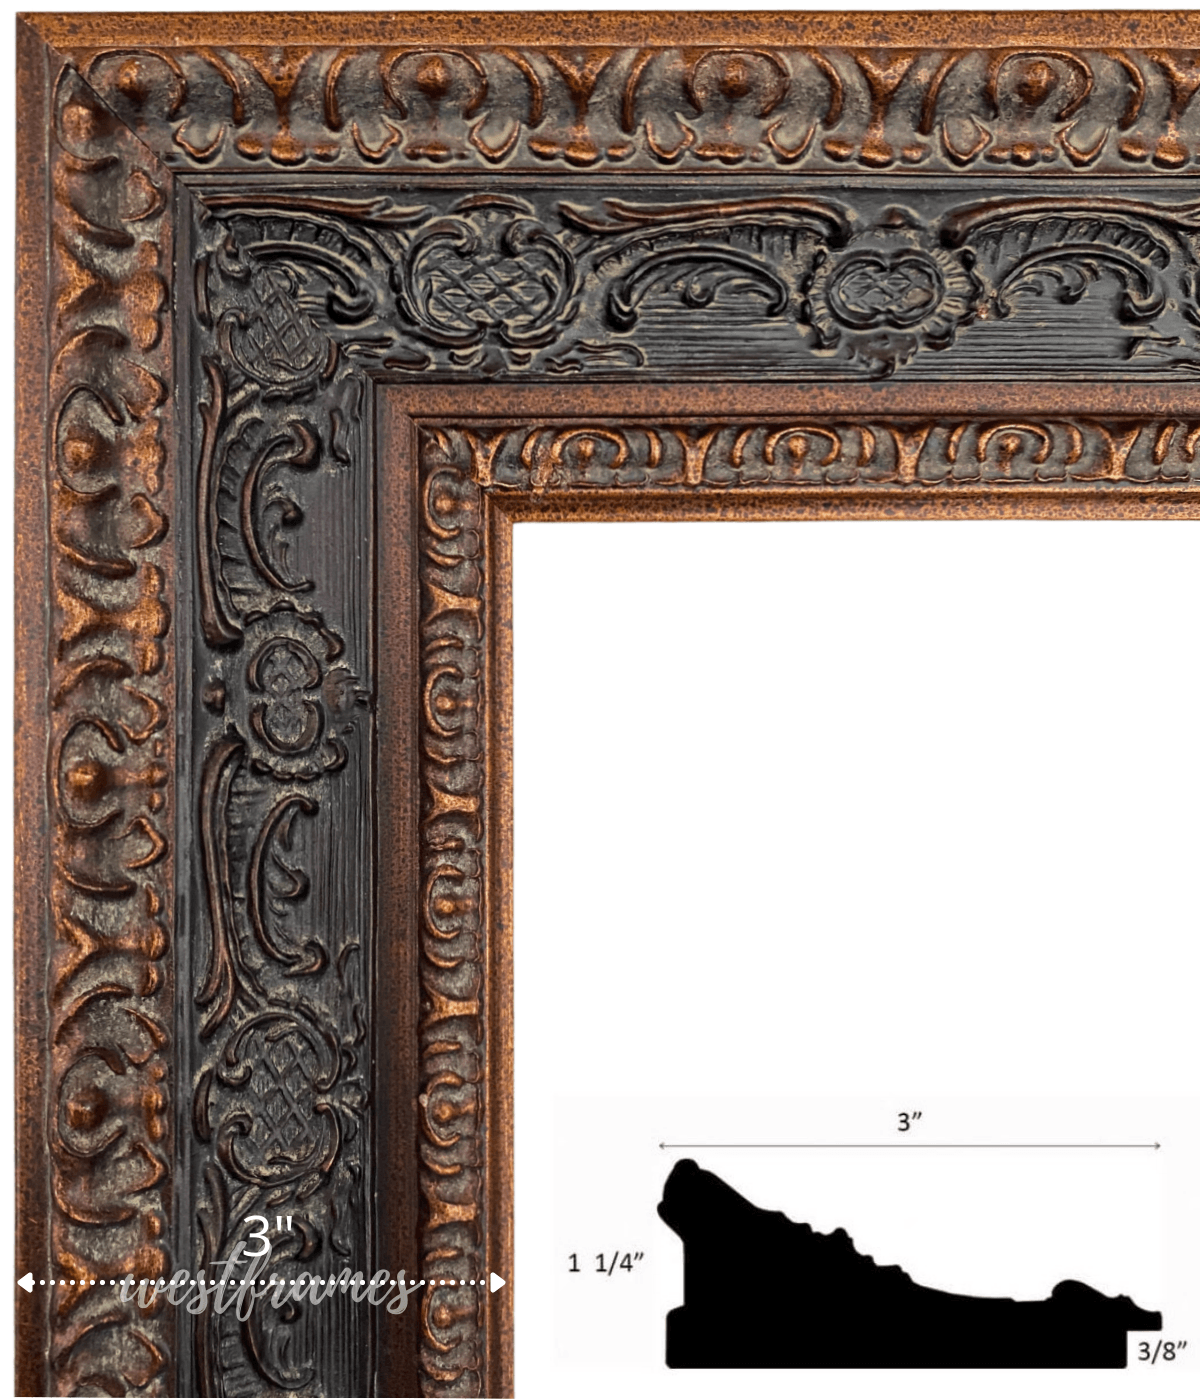 Parisienne Ornate Embossed Wood Picture Frame Antique Bronze Black Patina Finish 3" Wide - West Frames